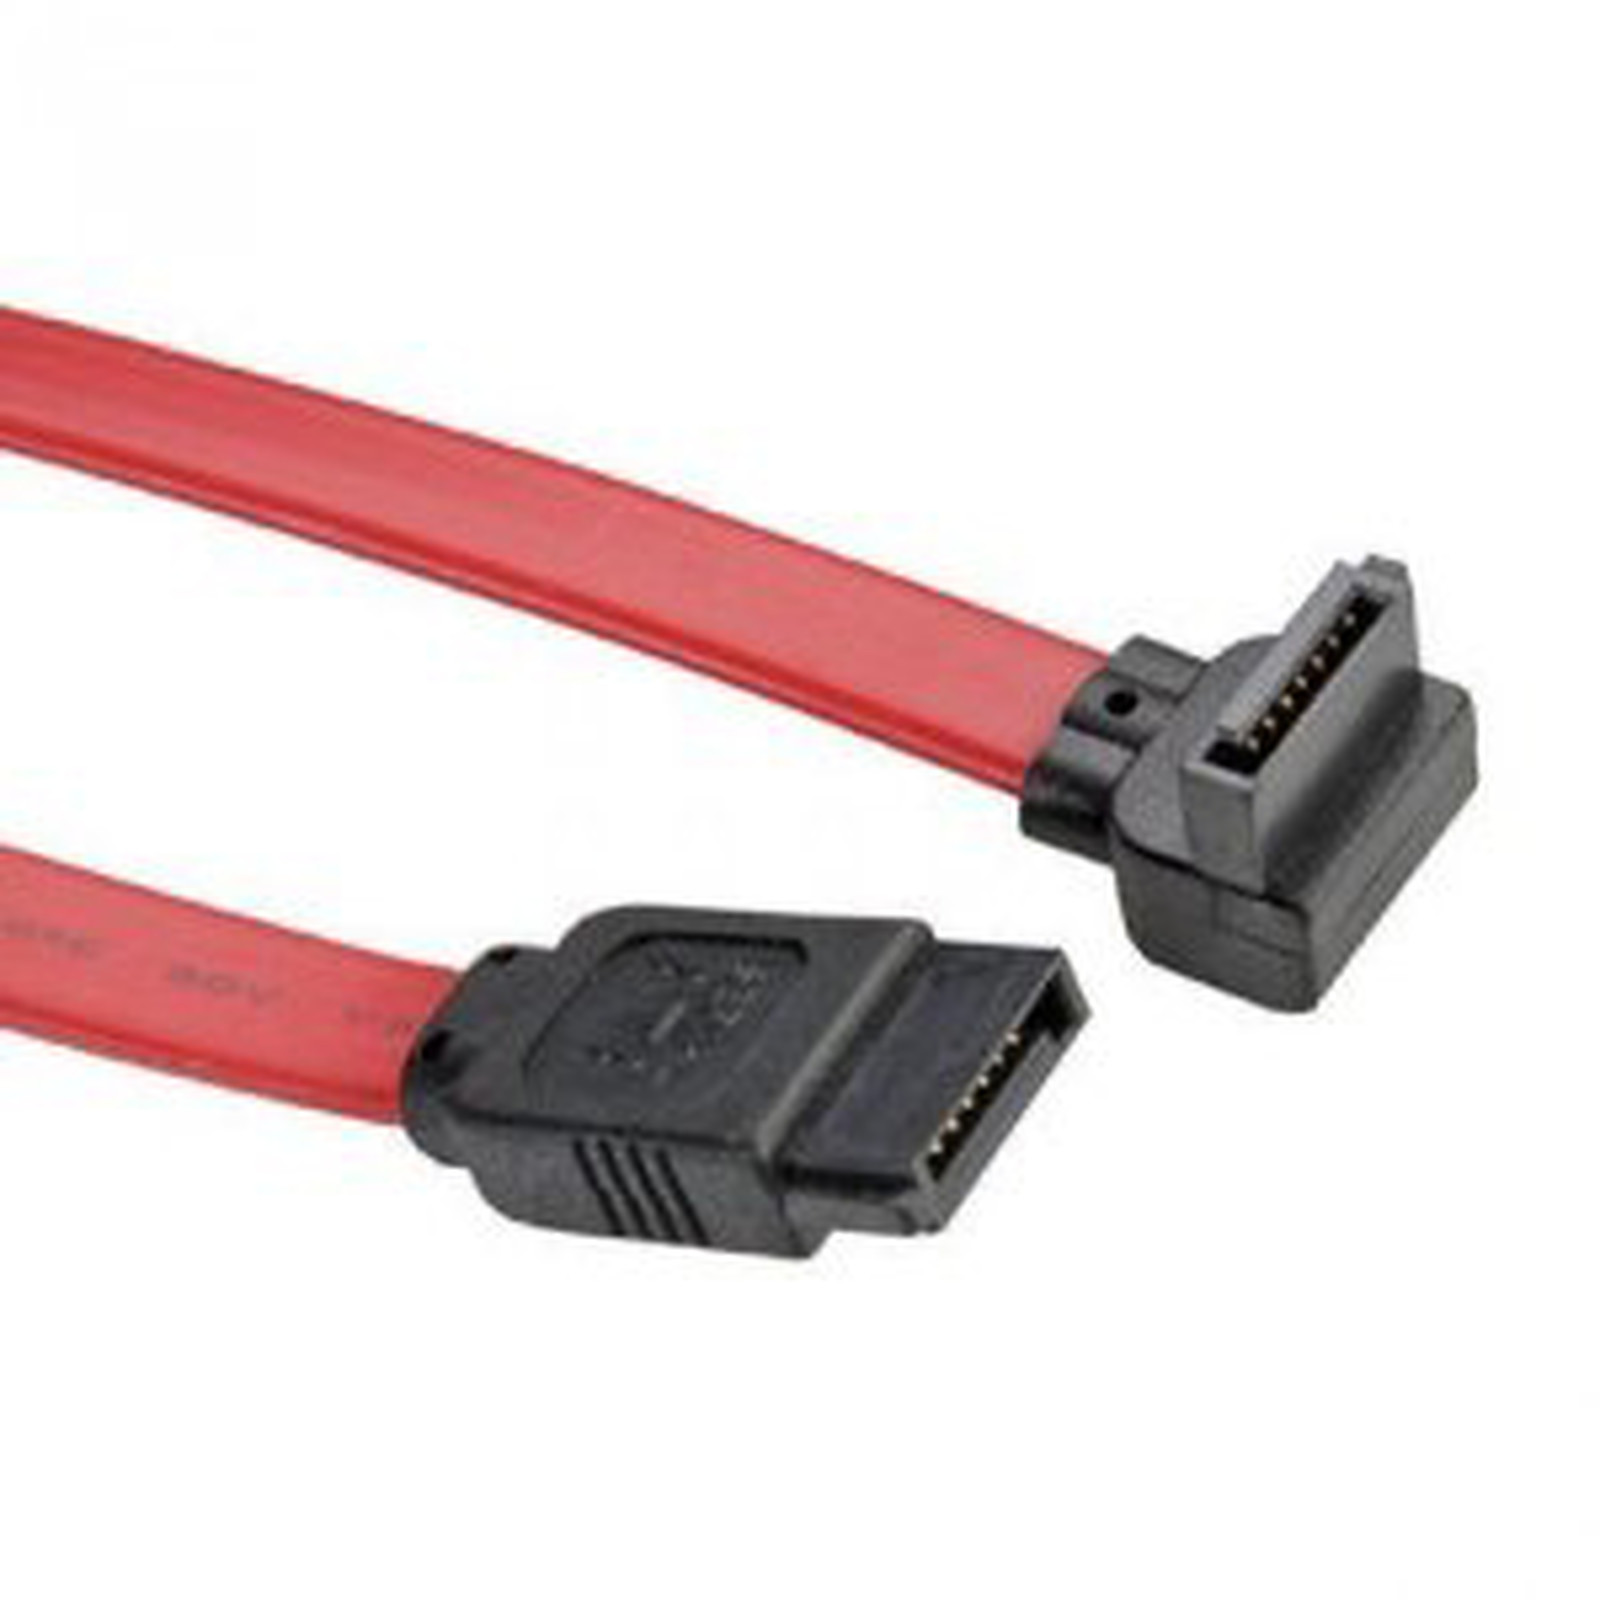 Cable SATA coude vers le bas (50 cm) - Serial ATA Generique